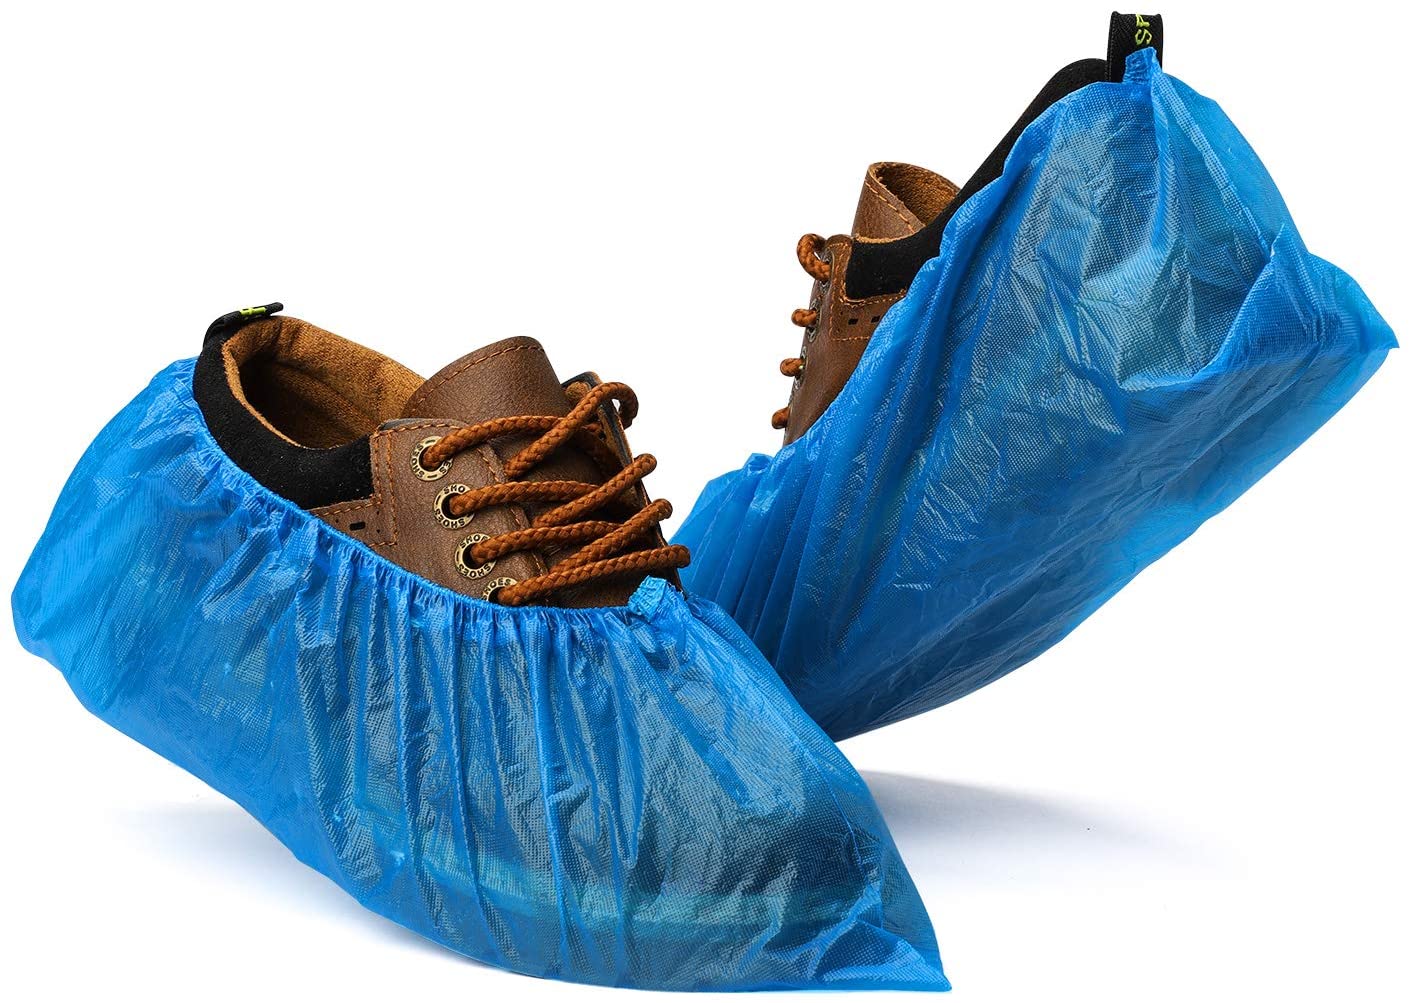 Disposable plastic PE/CPE shoe cover 